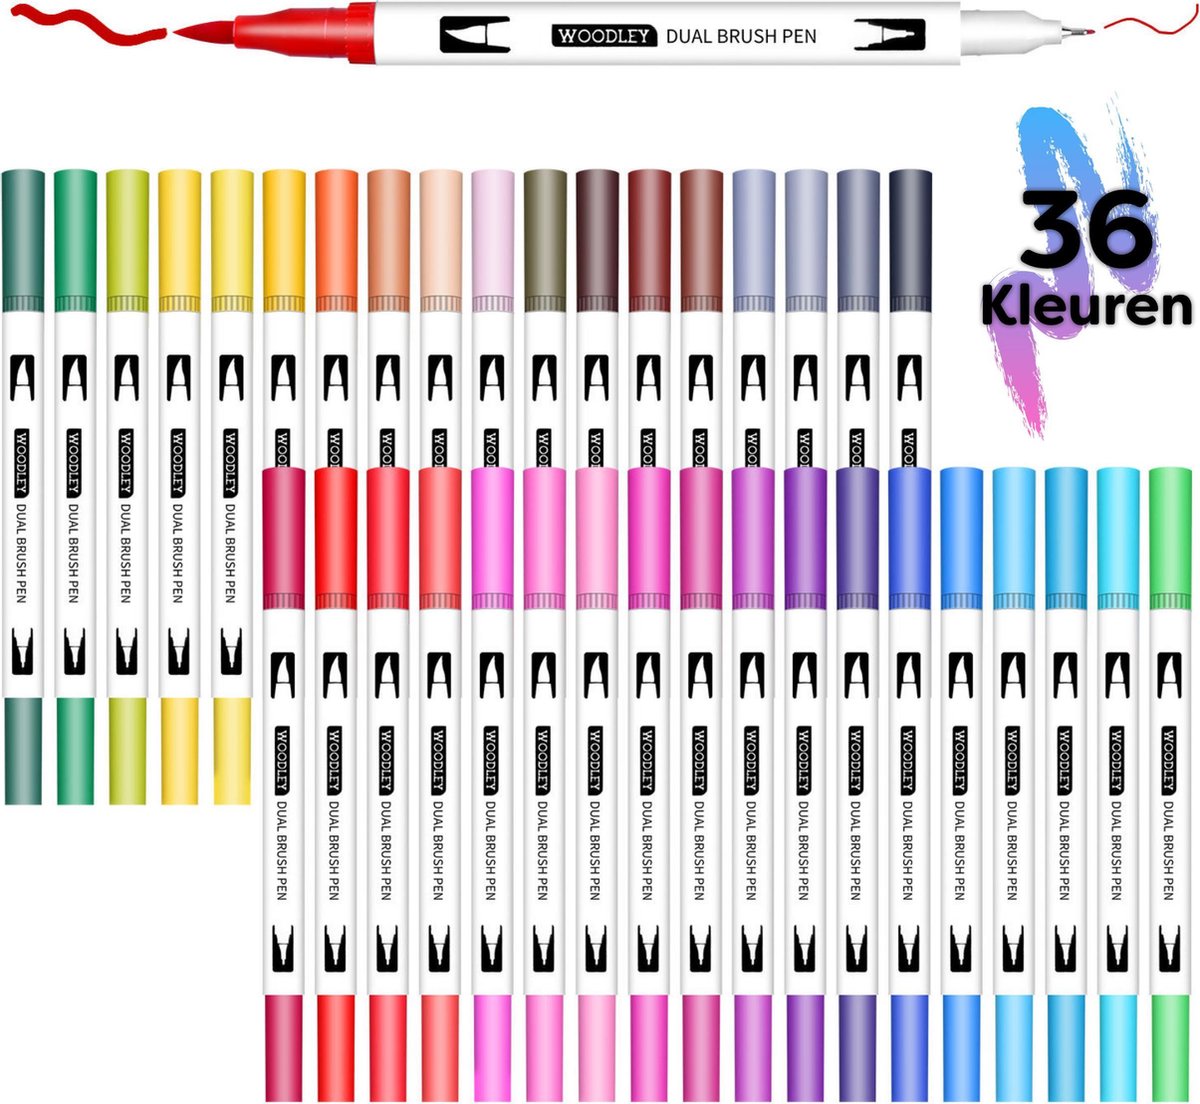 Dual Brush Pen – 36 Kleuren